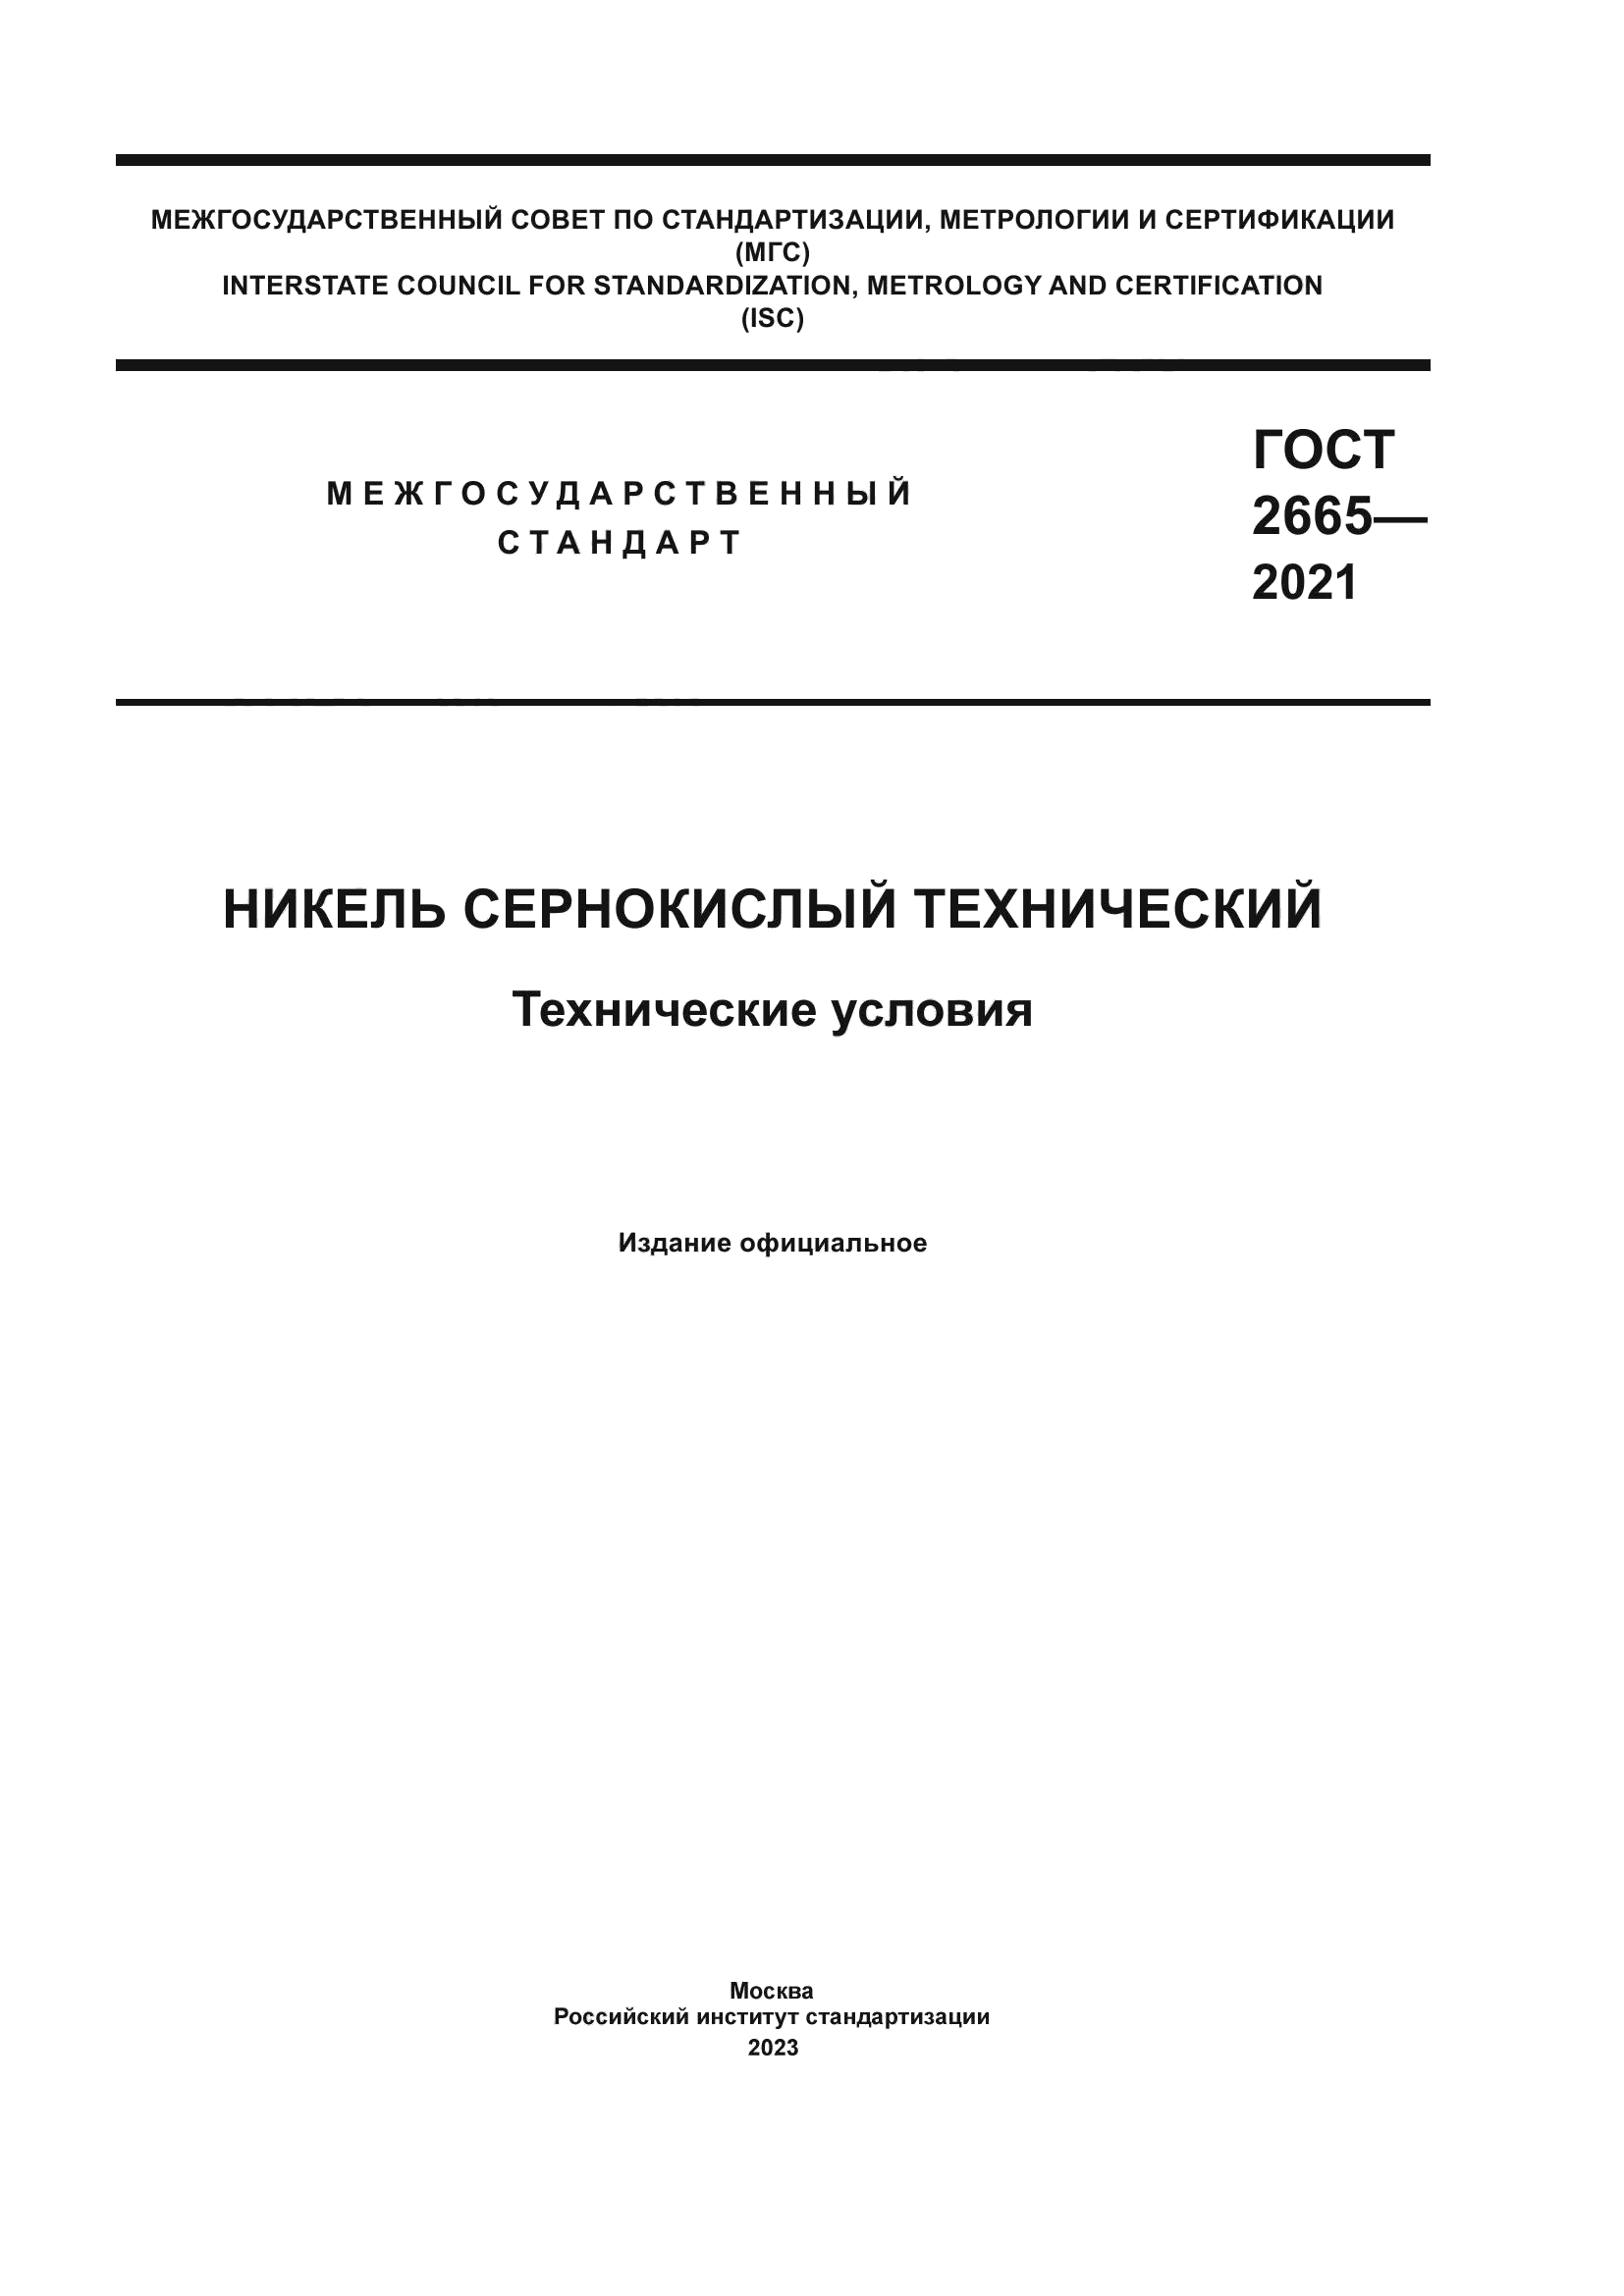 ГОСТ 2665-2021